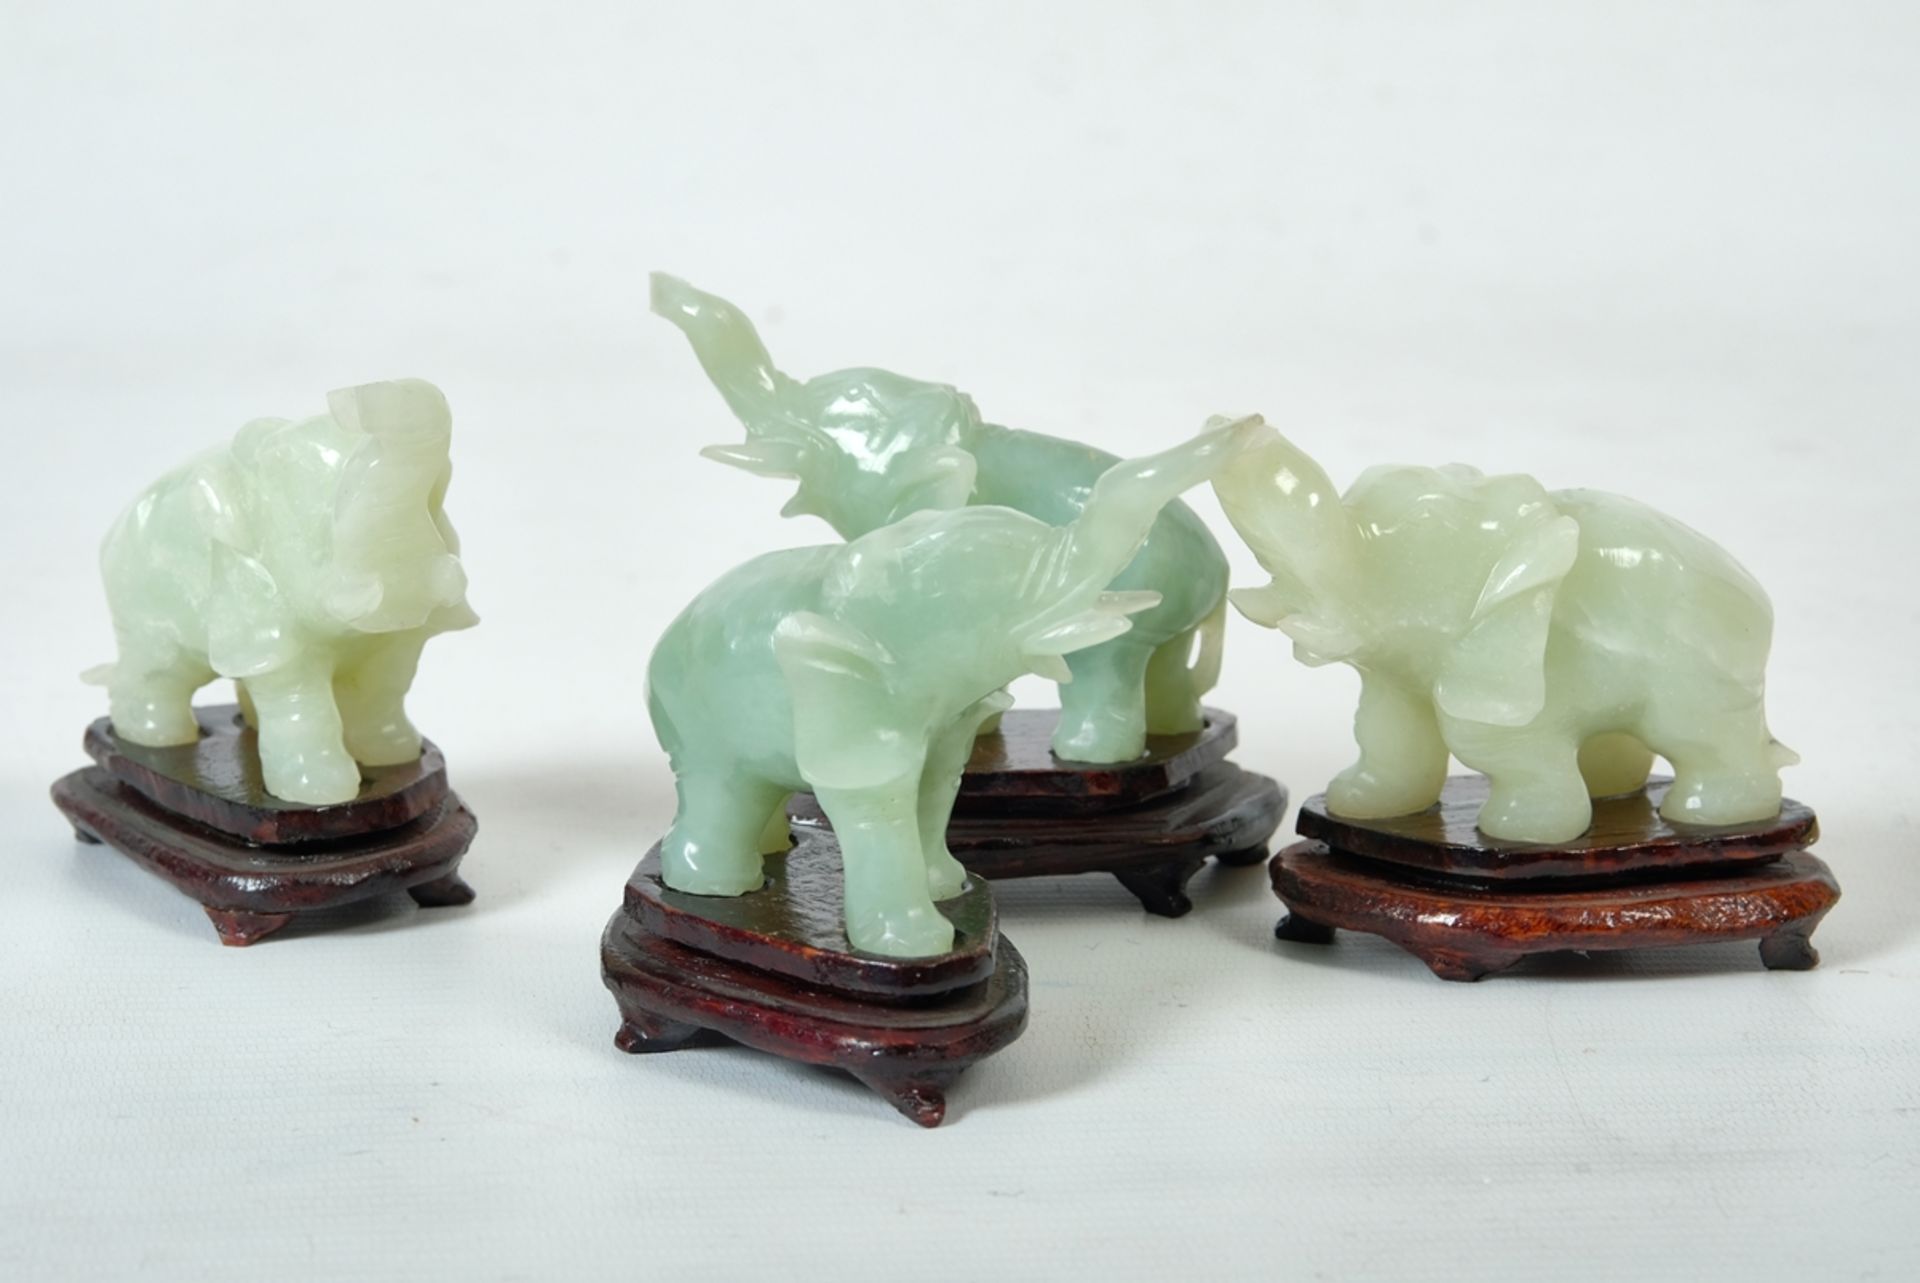 Jade elephants,four pieces, China. One elephant chipped.